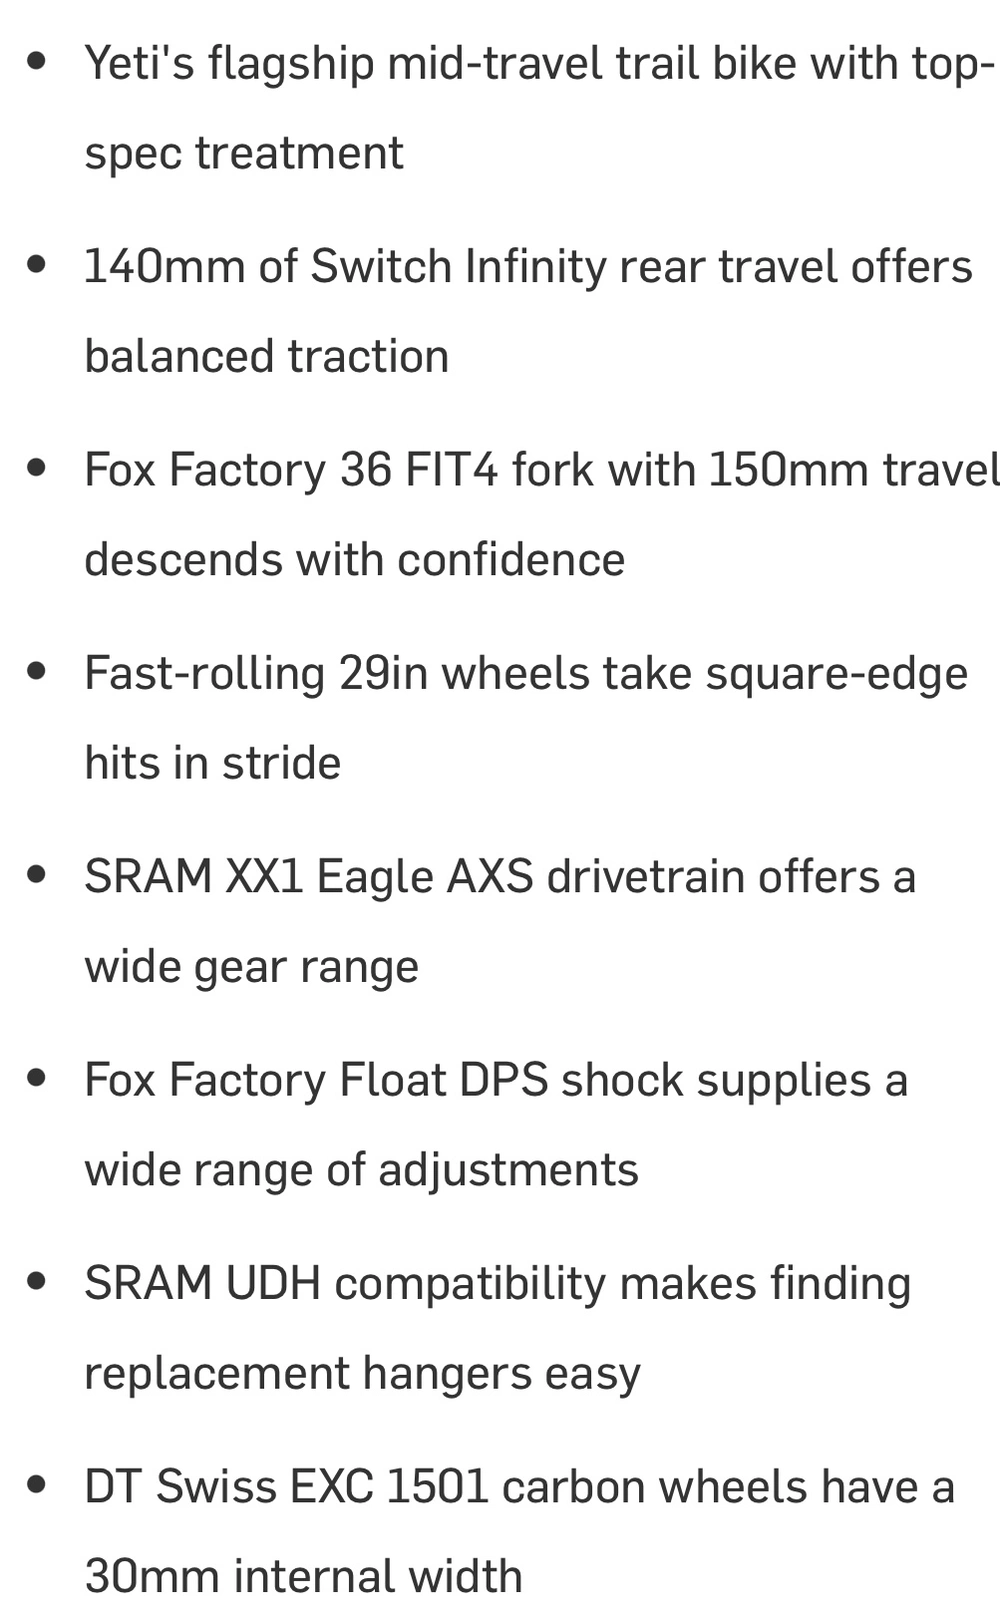 features of Yeti bikes